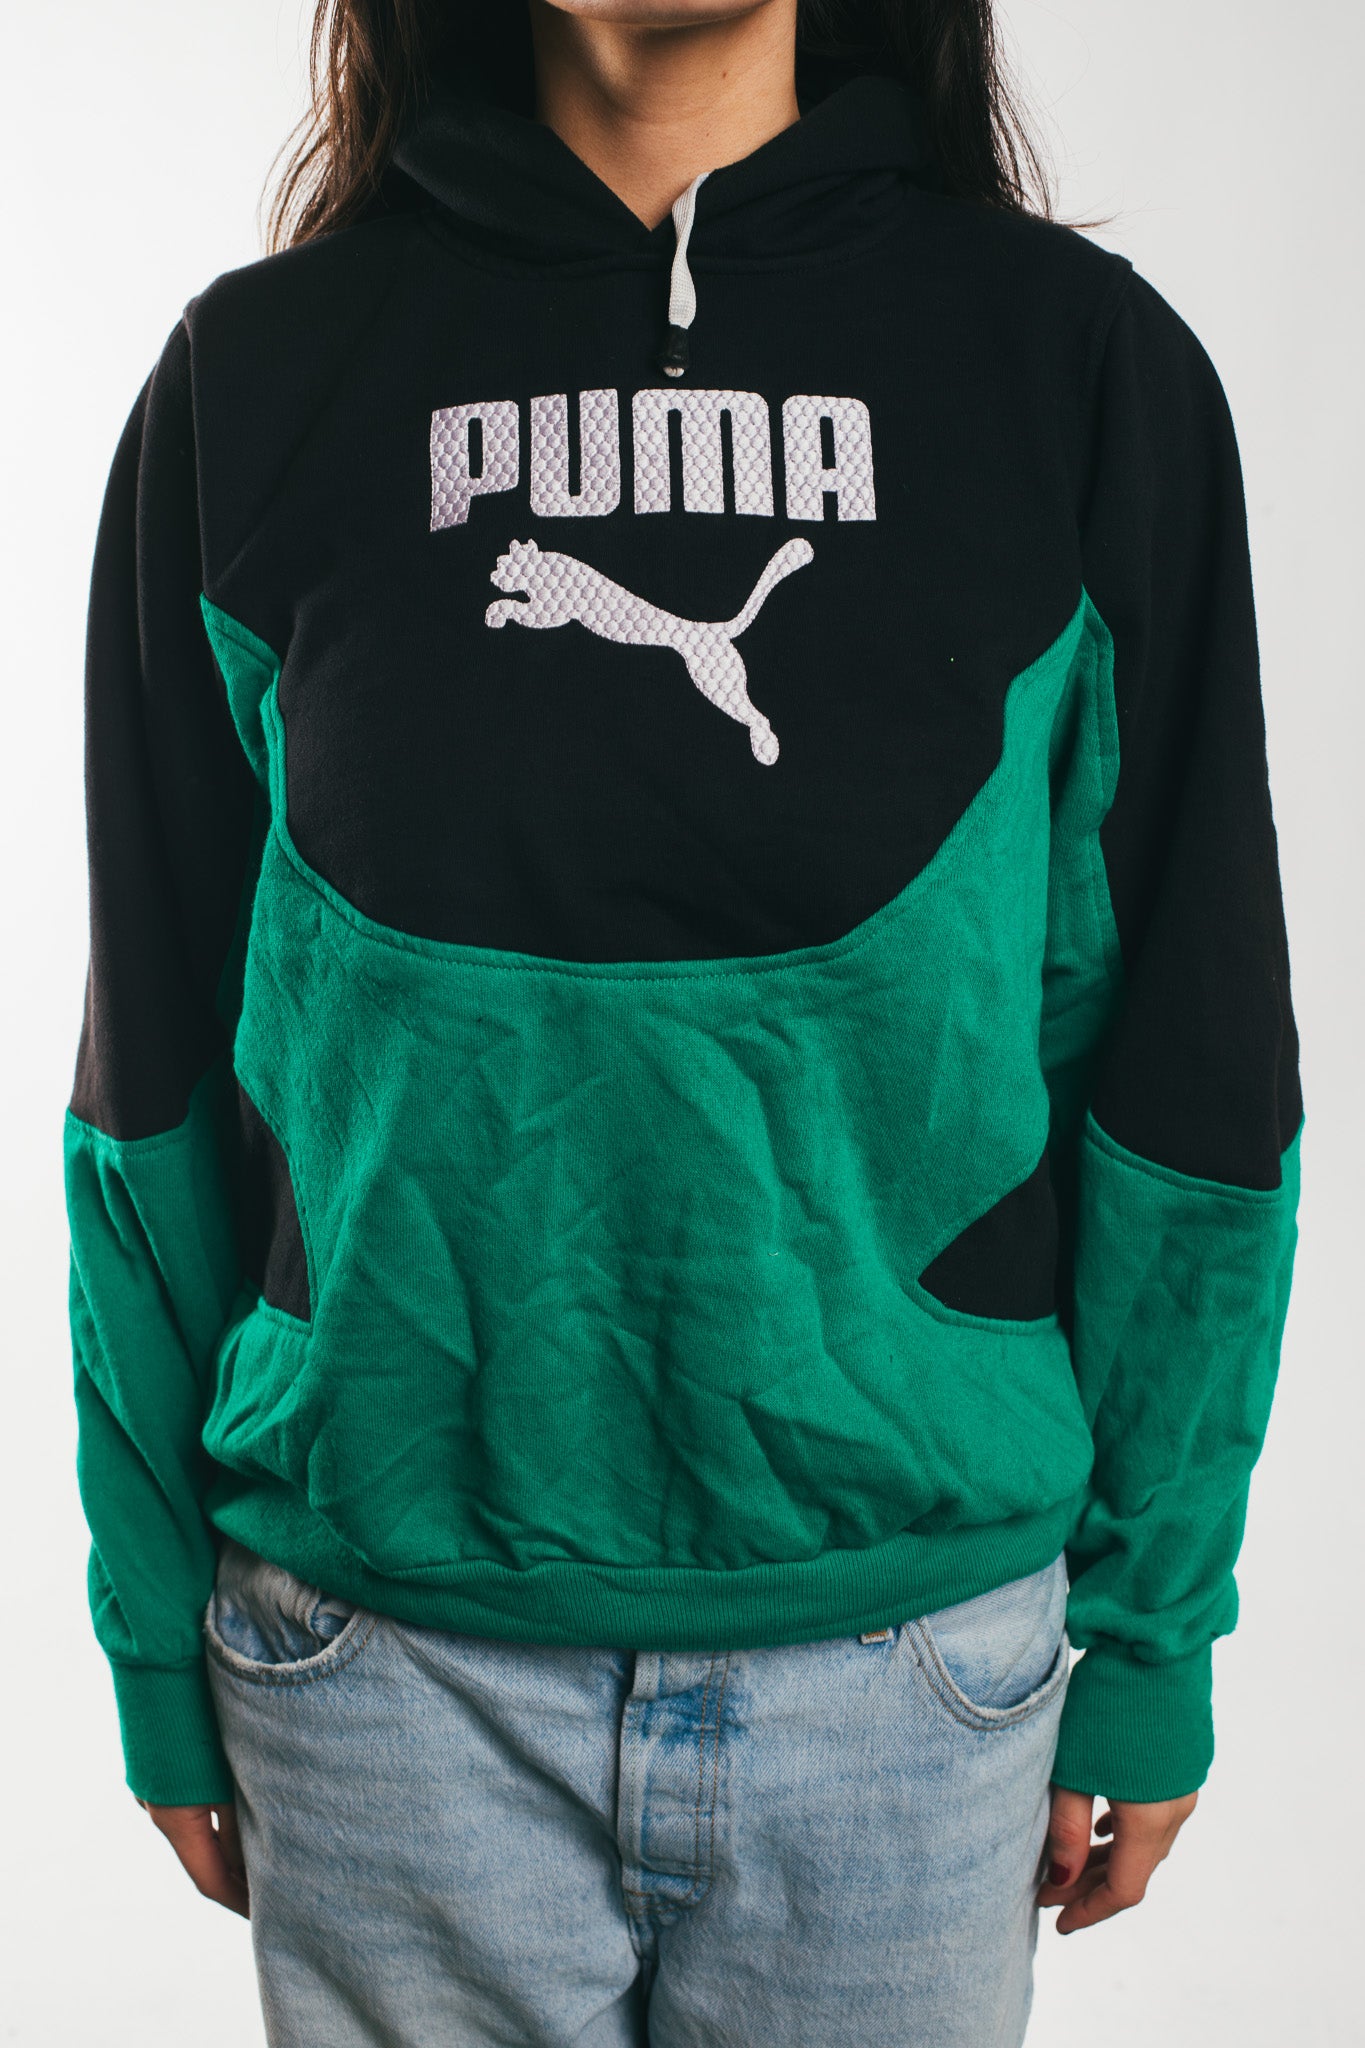 Puma - Hoodie (M)